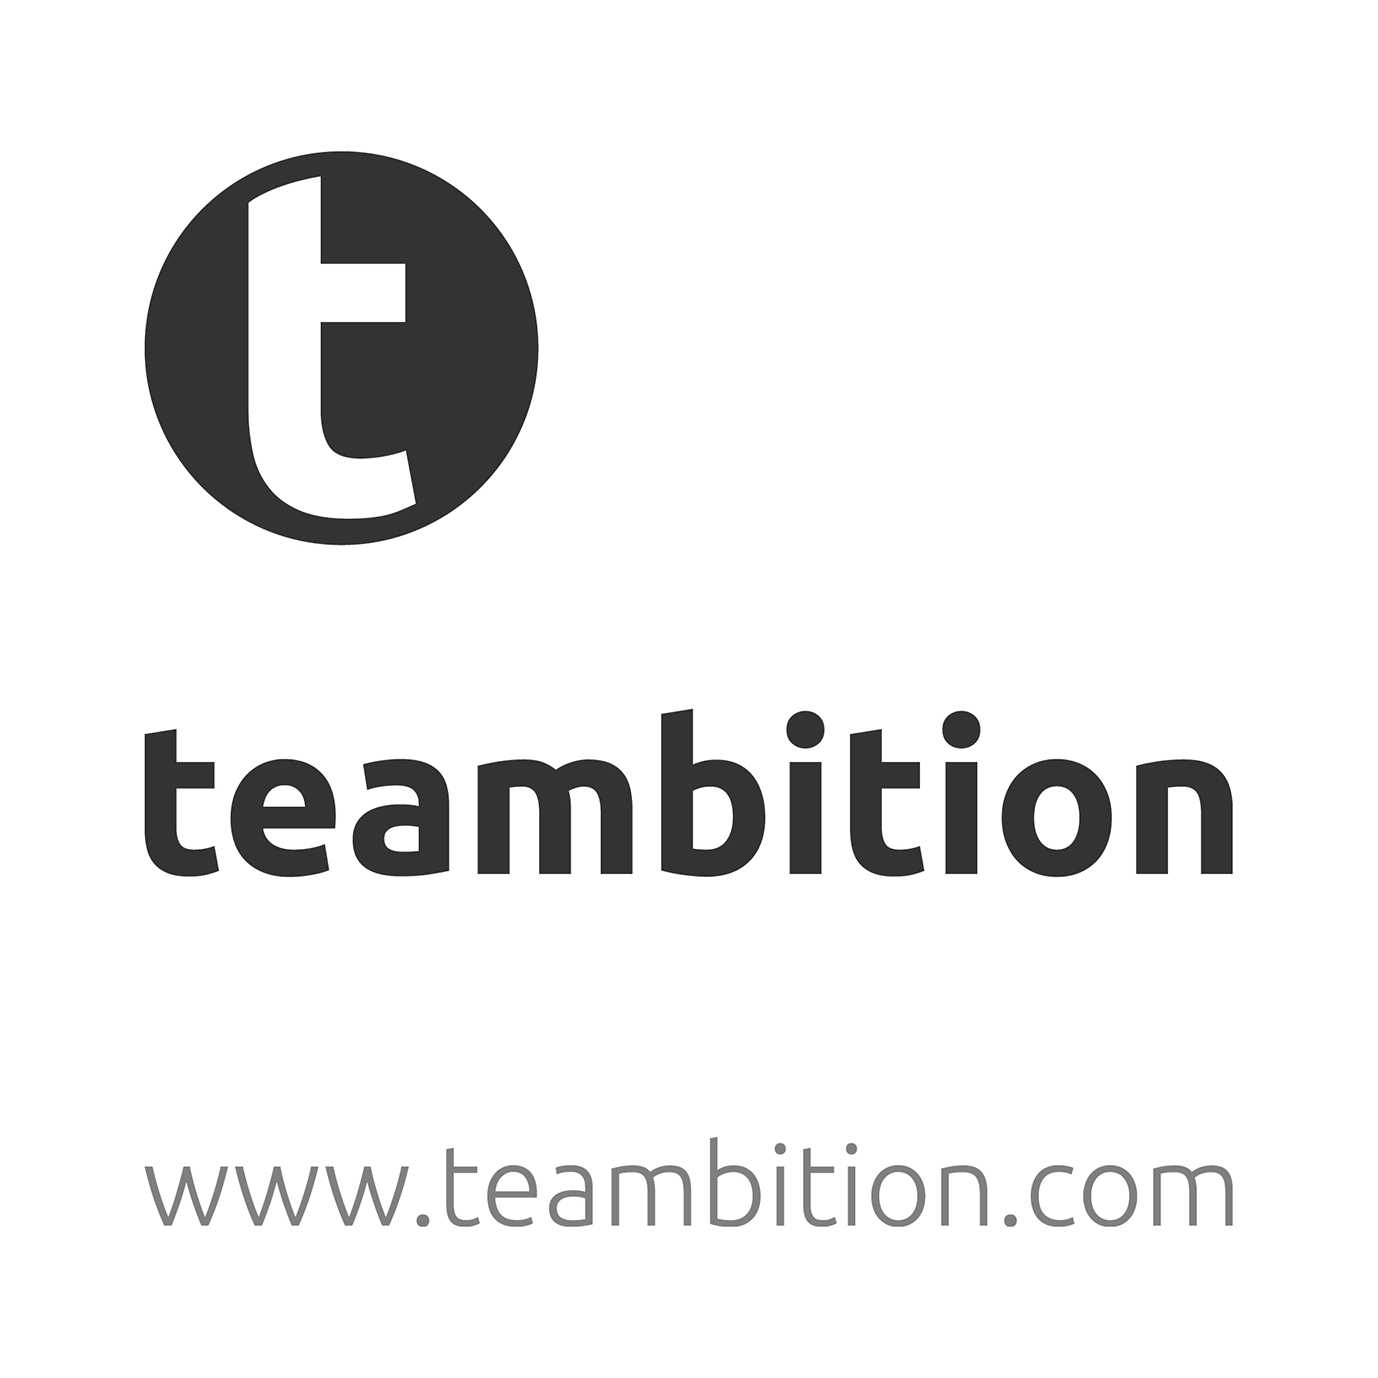 teambition